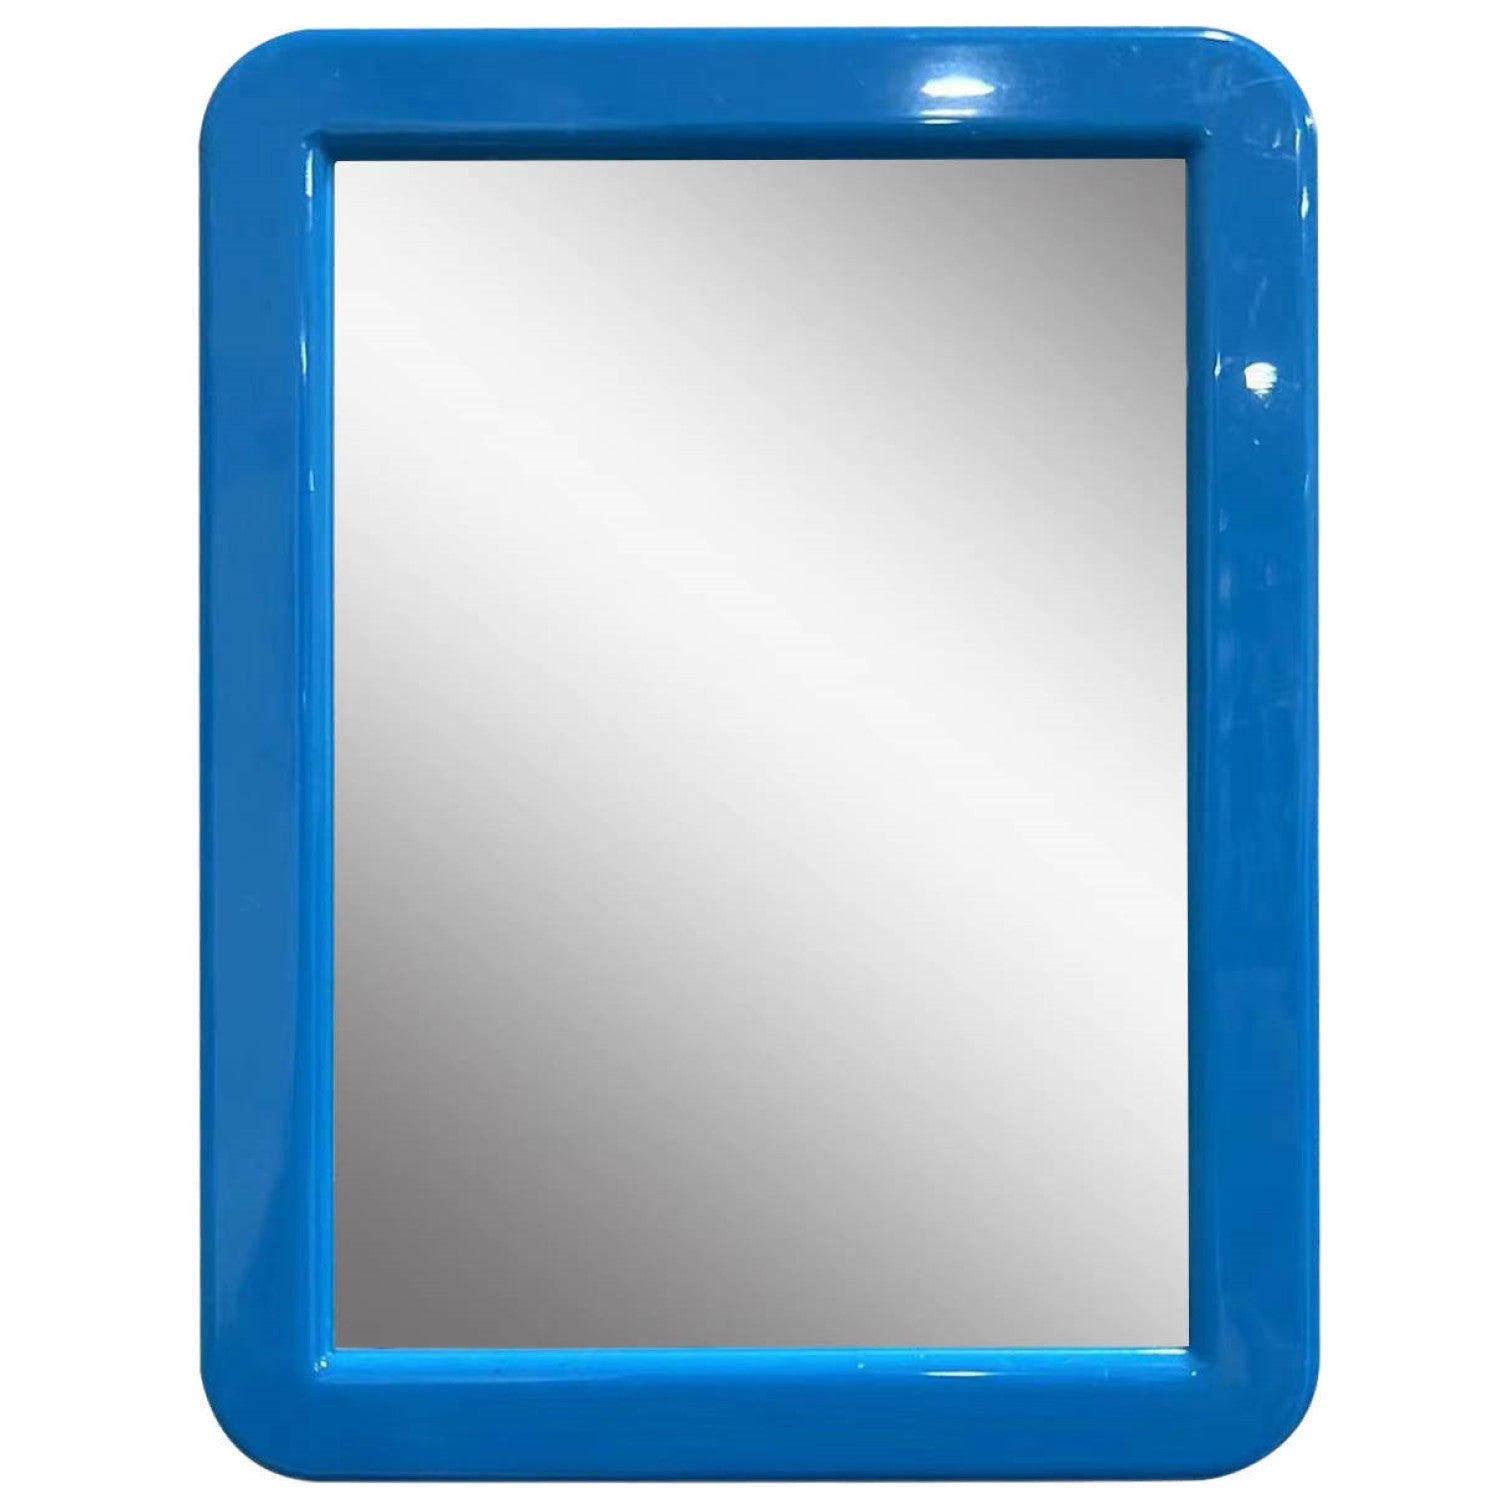 Cerem-magnetic Glass Mirror for School Locker, Fridge 5 inch x 7 inch Gray, Size: 5 x 7